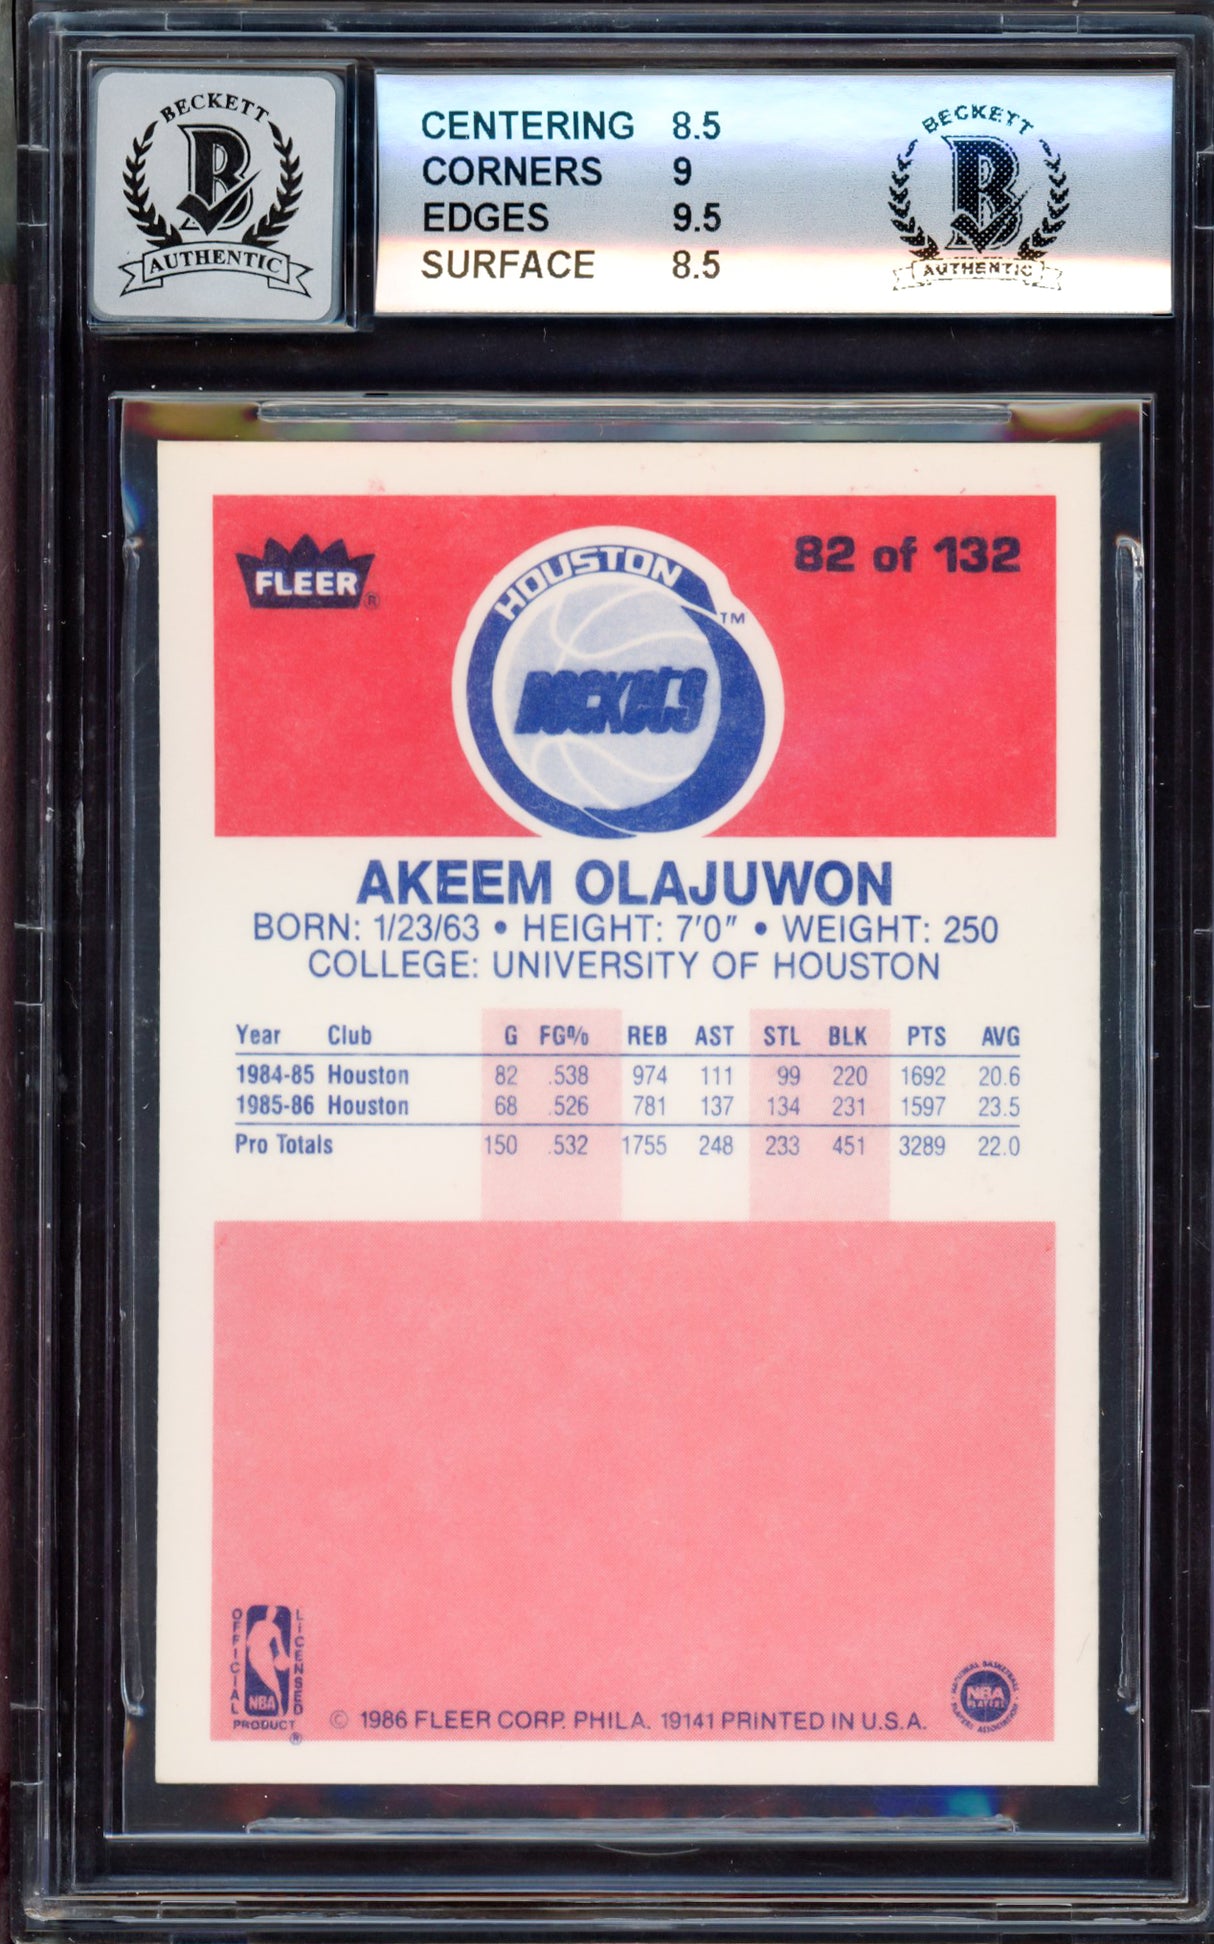 Hakeem Olajuwon Autographed 1986-87 Fleer Rookie Card #82 Houston Rockets BGS 8.5 Auto Grade Gem Mint 10 "The Dream" Beckett BAS #15530336